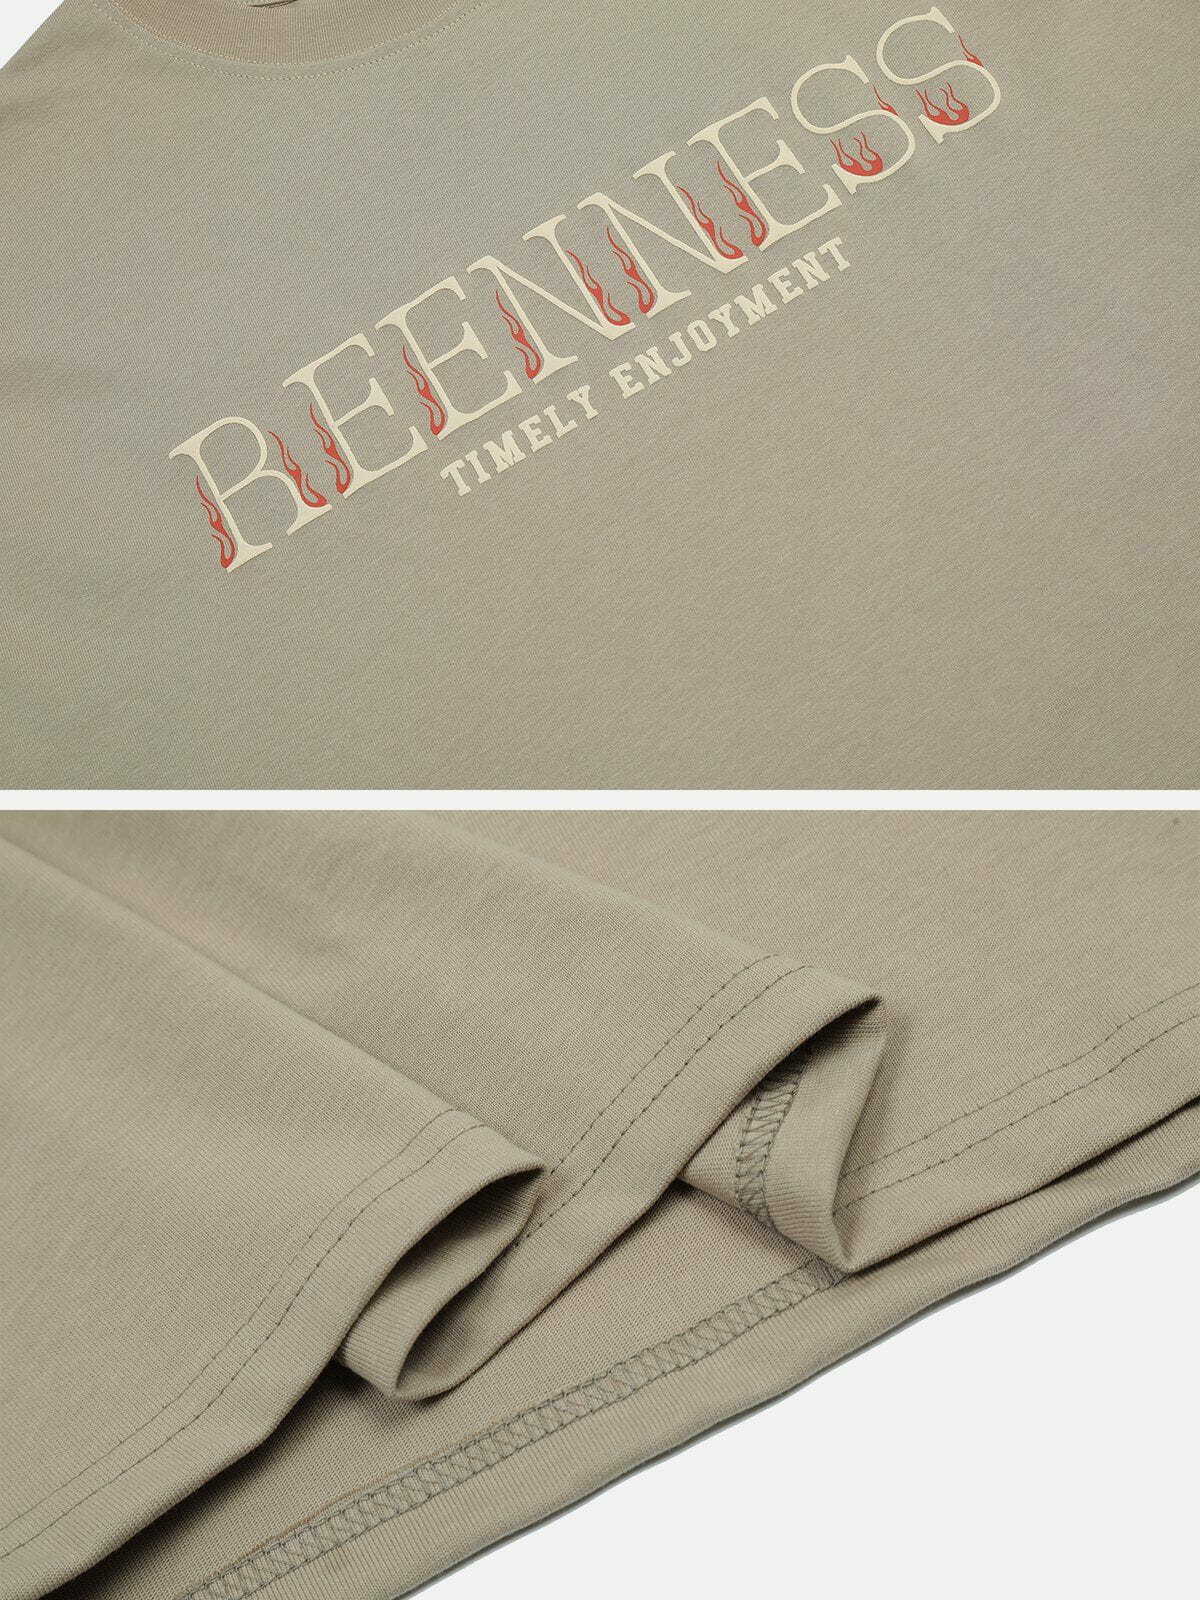 blurring design tee edgy retro streetwear staple 3892